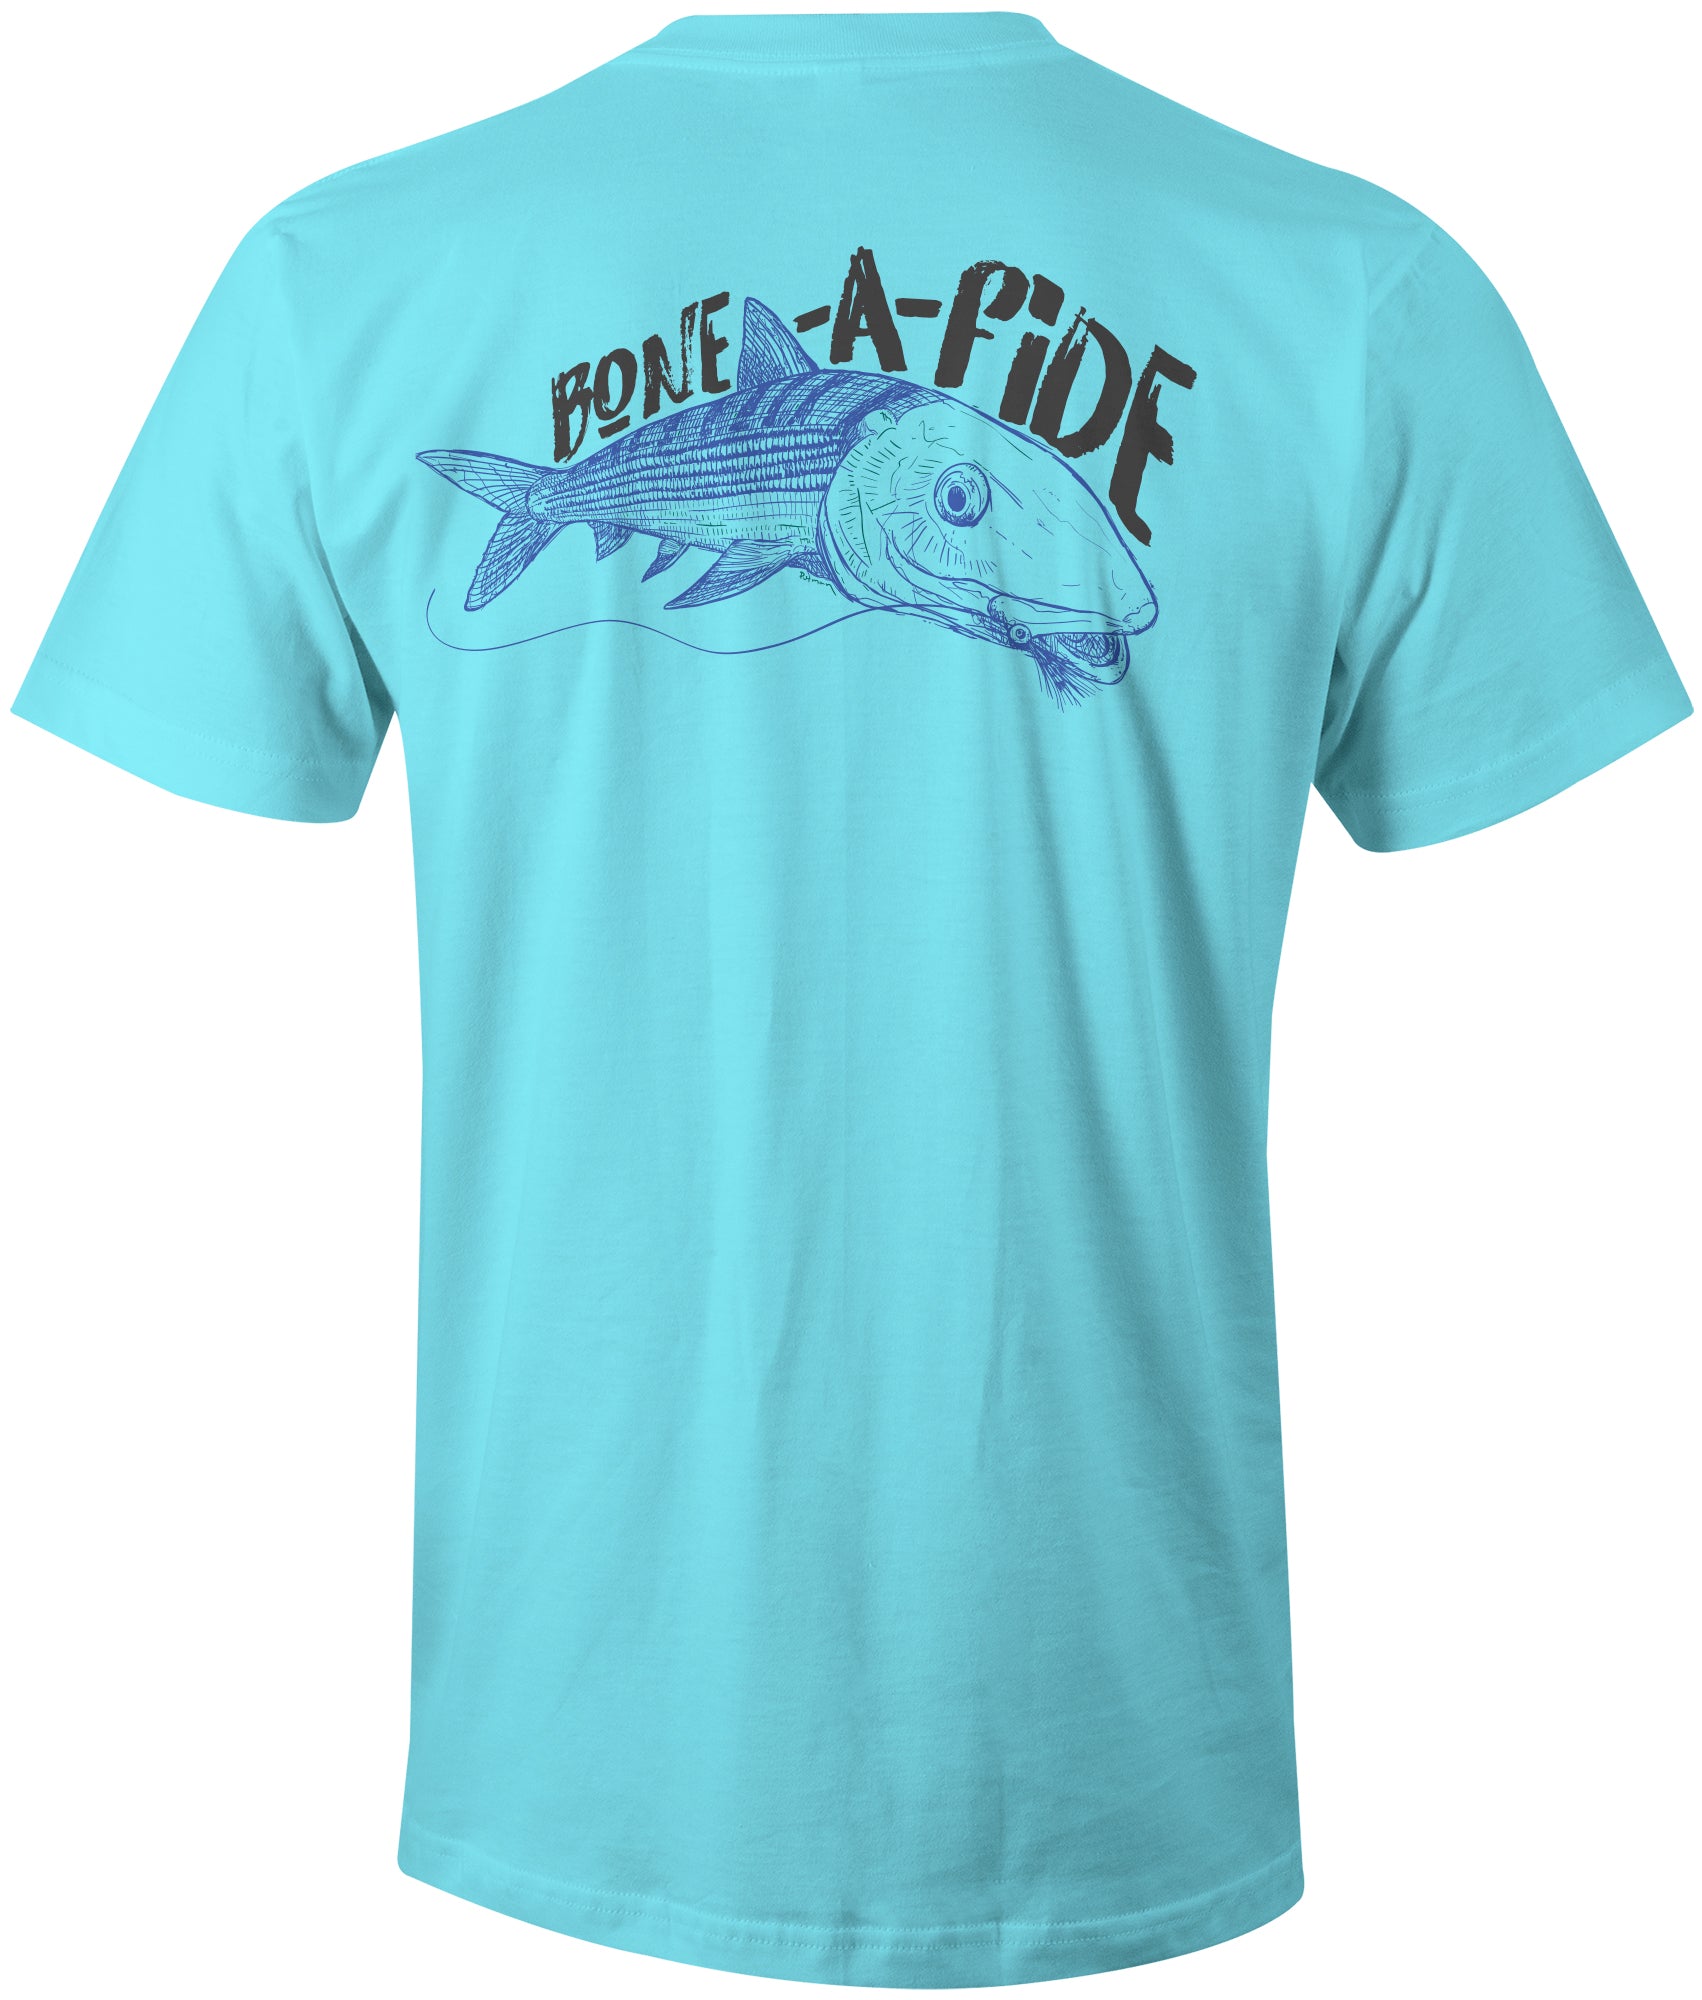 Bone-A-Fide Bone Fish T-Shirt